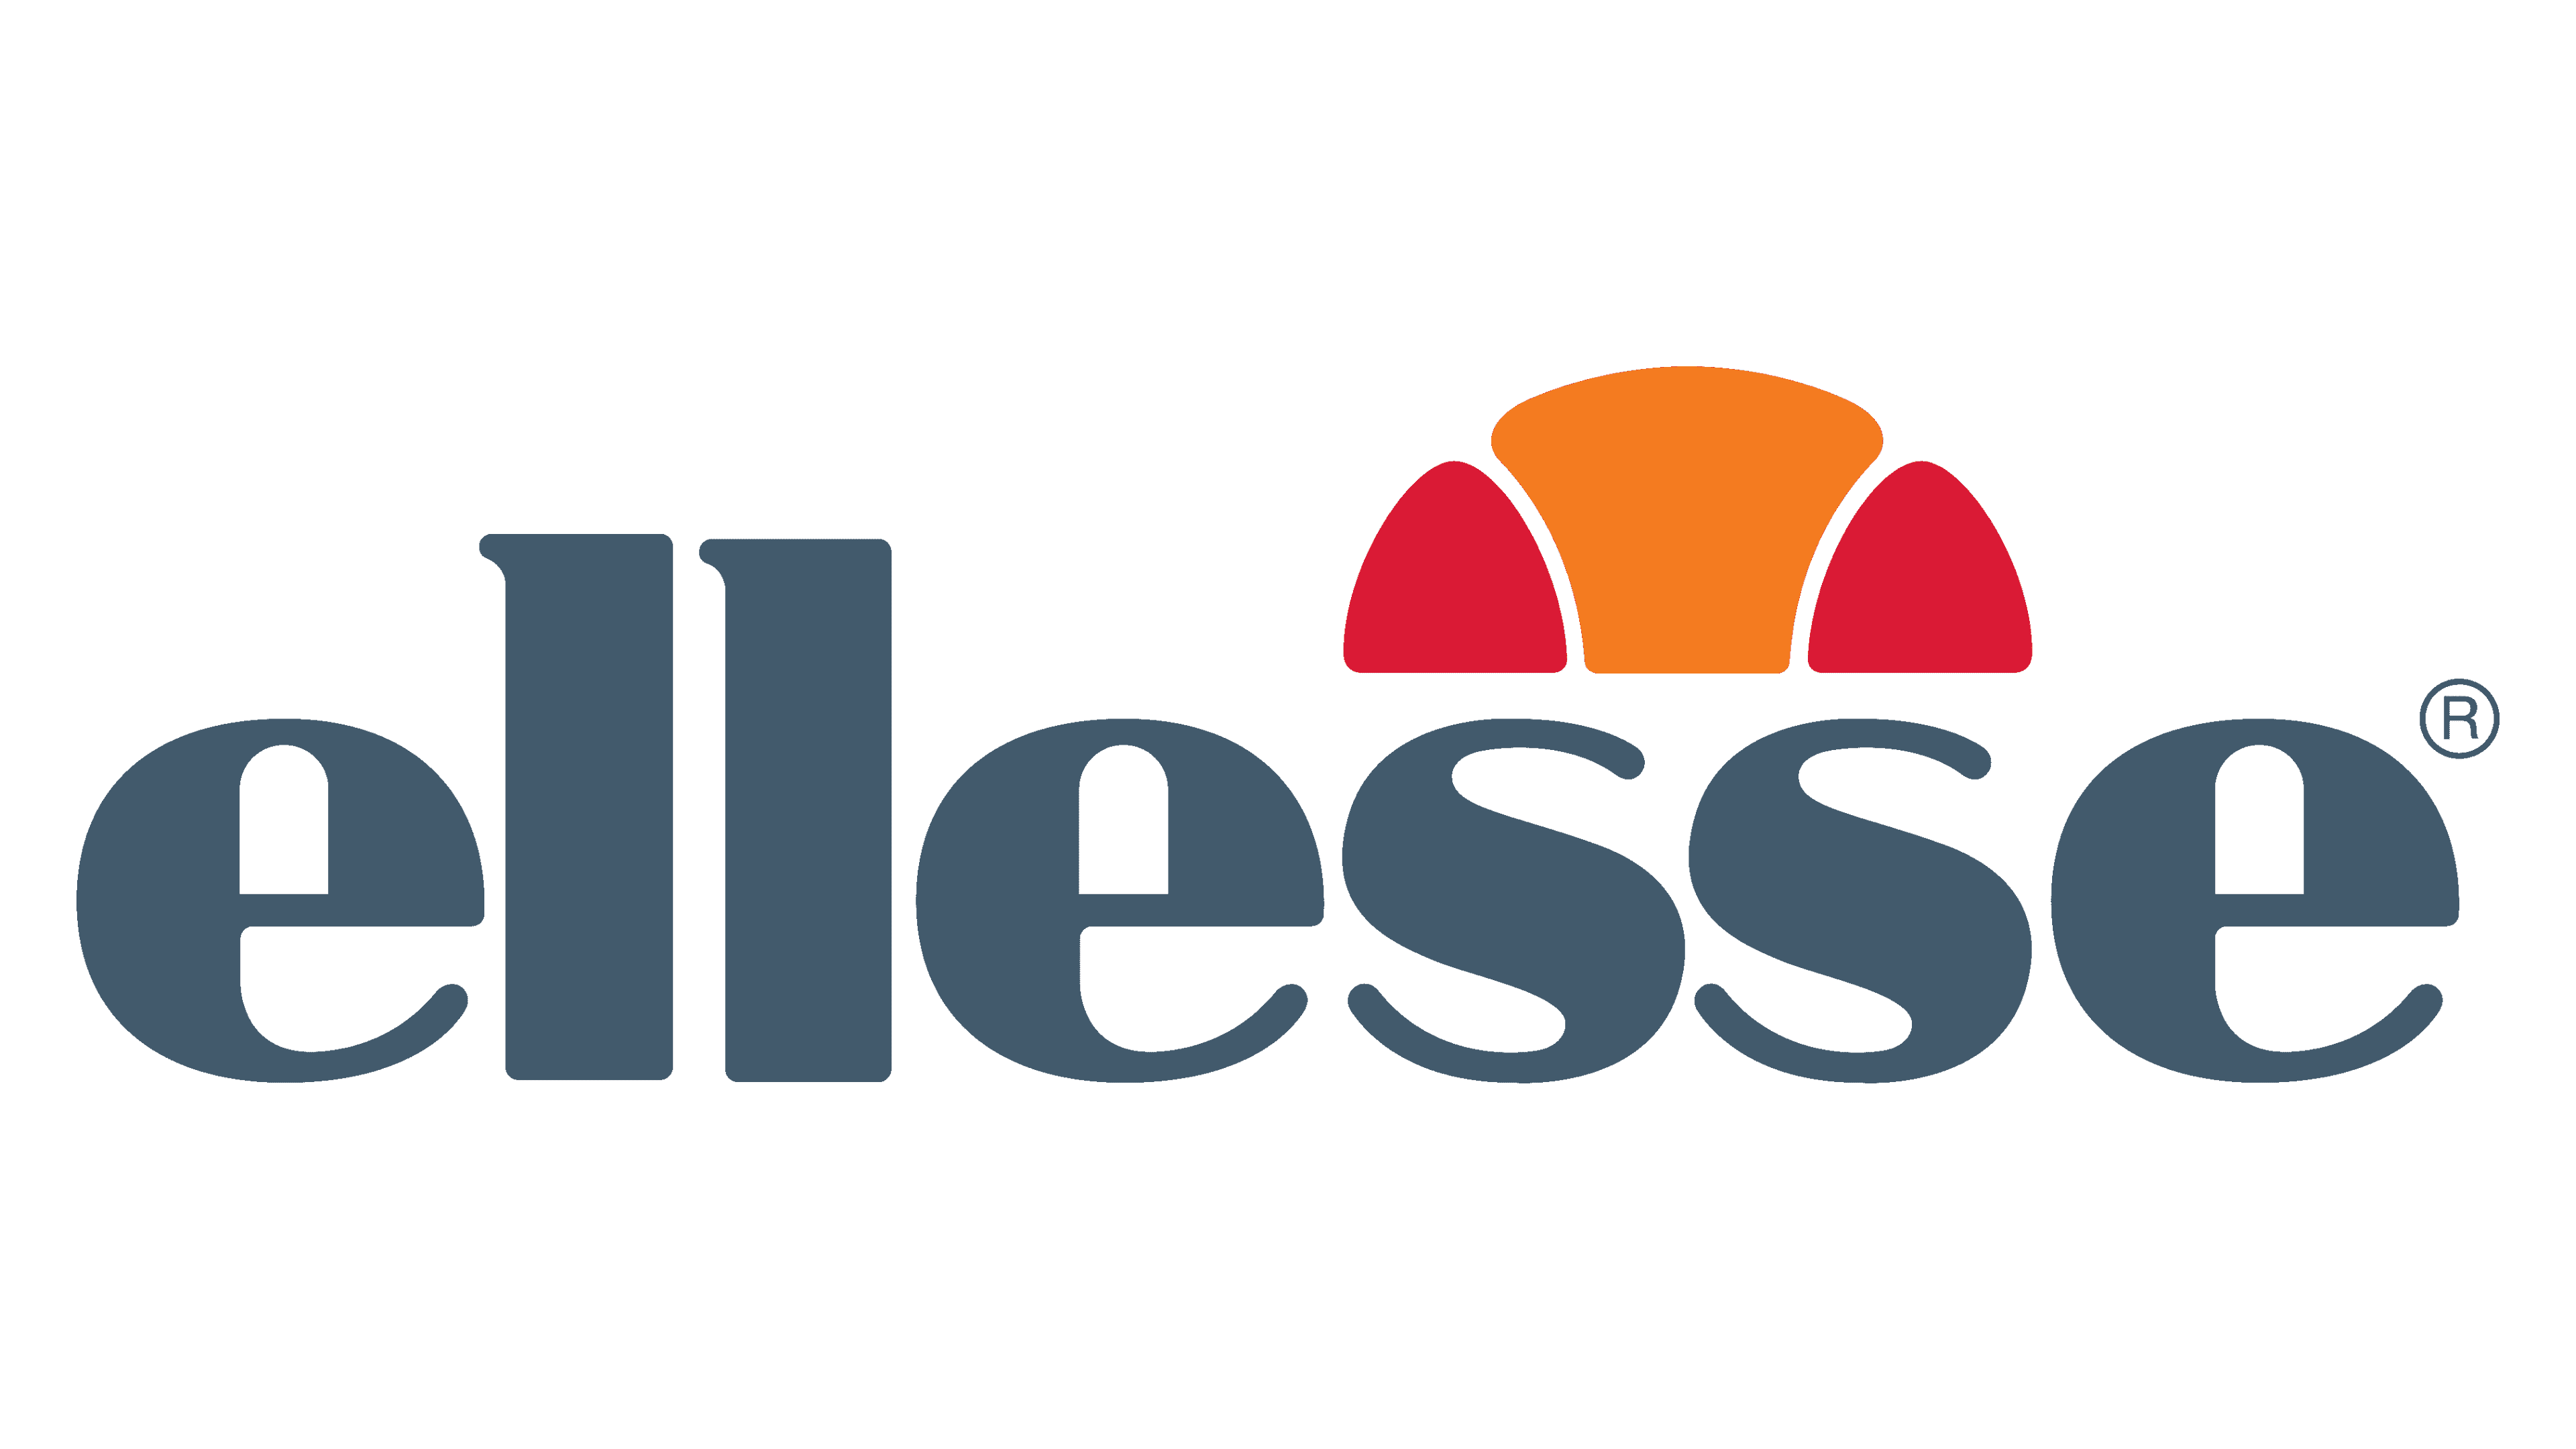 Ellesse, Brands of the World™